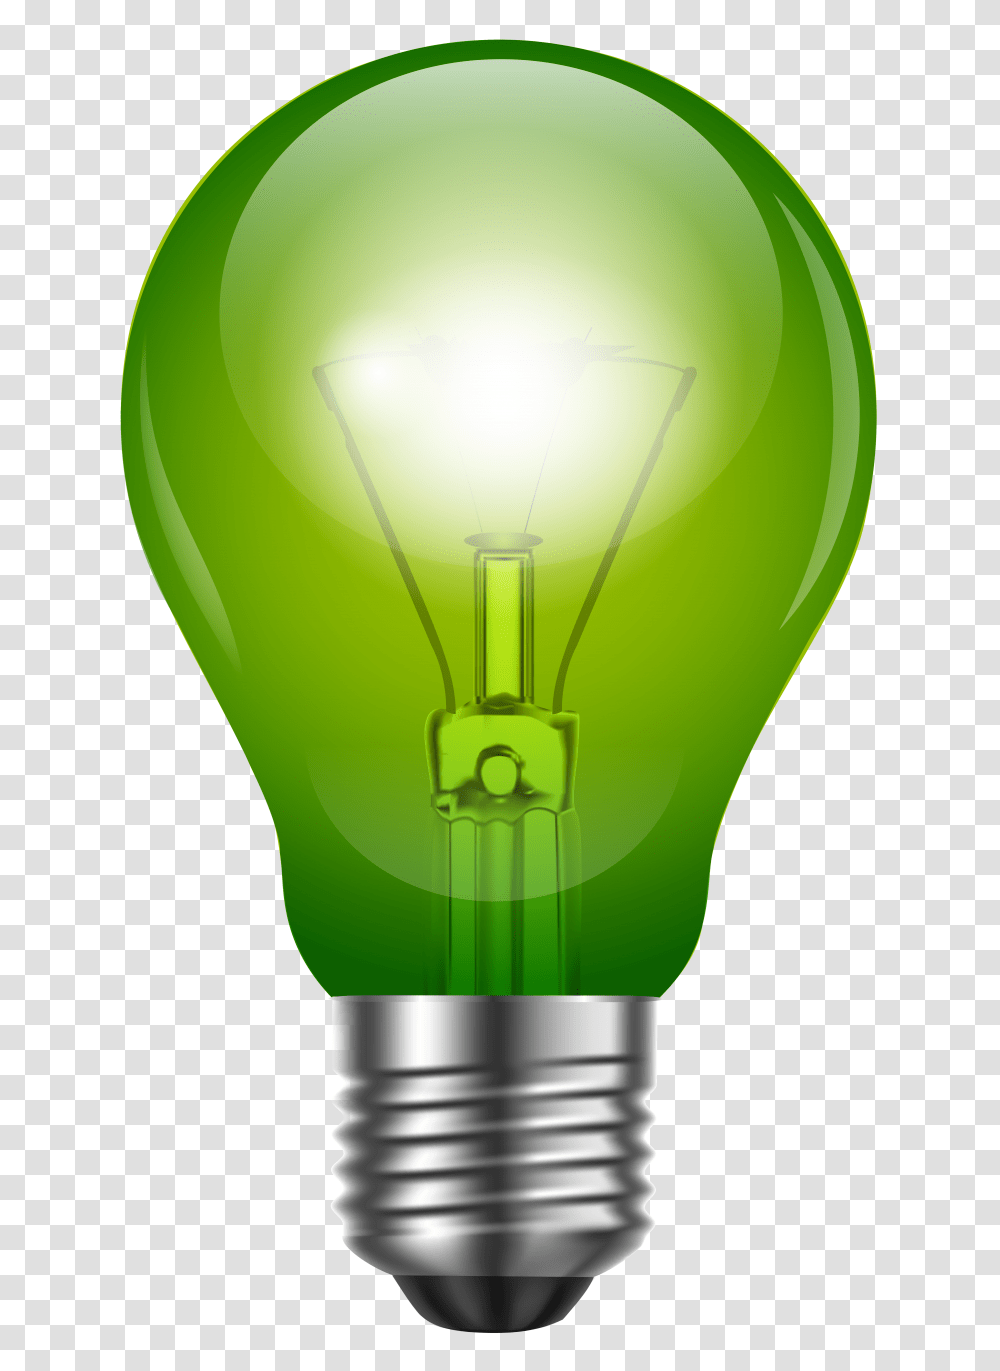 Download Hd Green Light Bulb Clip Green Light Bulb Clip Art, Lamp, Lightbulb Transparent Png